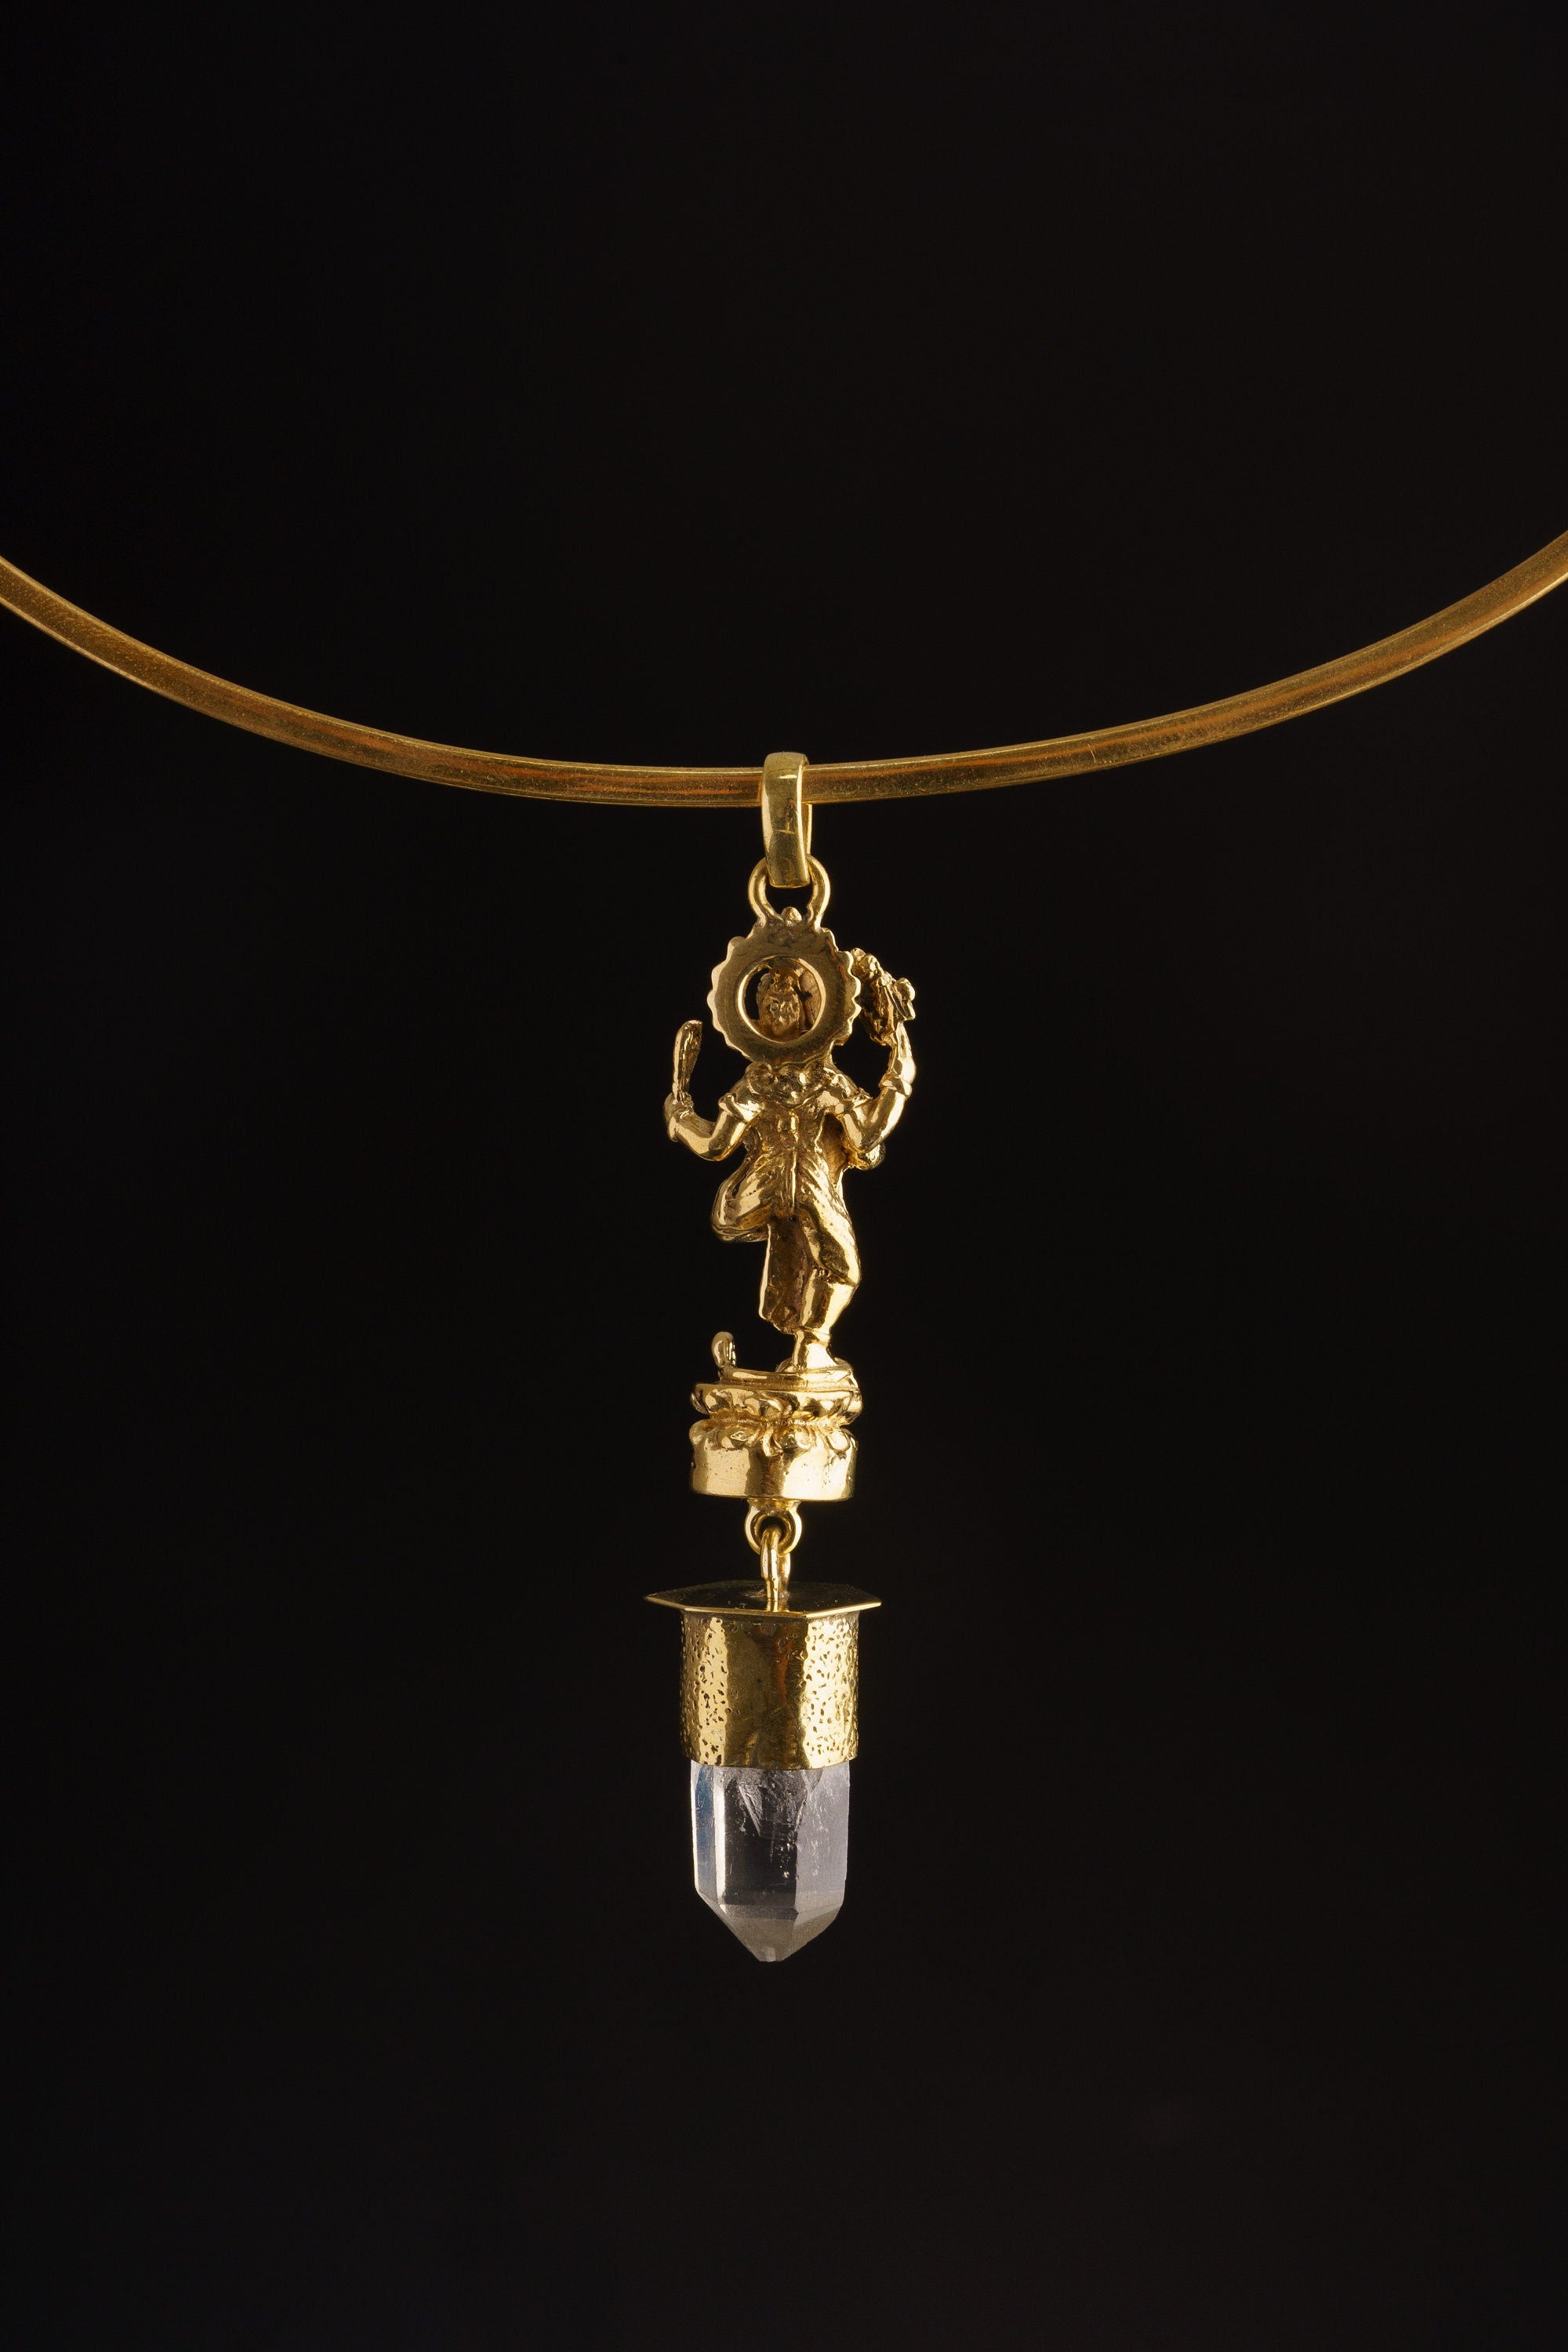 Himalayan Specialty Quartz - Shiny Golden Brass Set - Standing Lord Ganesha Cast Holding an Axe - Robust Dangling Talisman Pendant